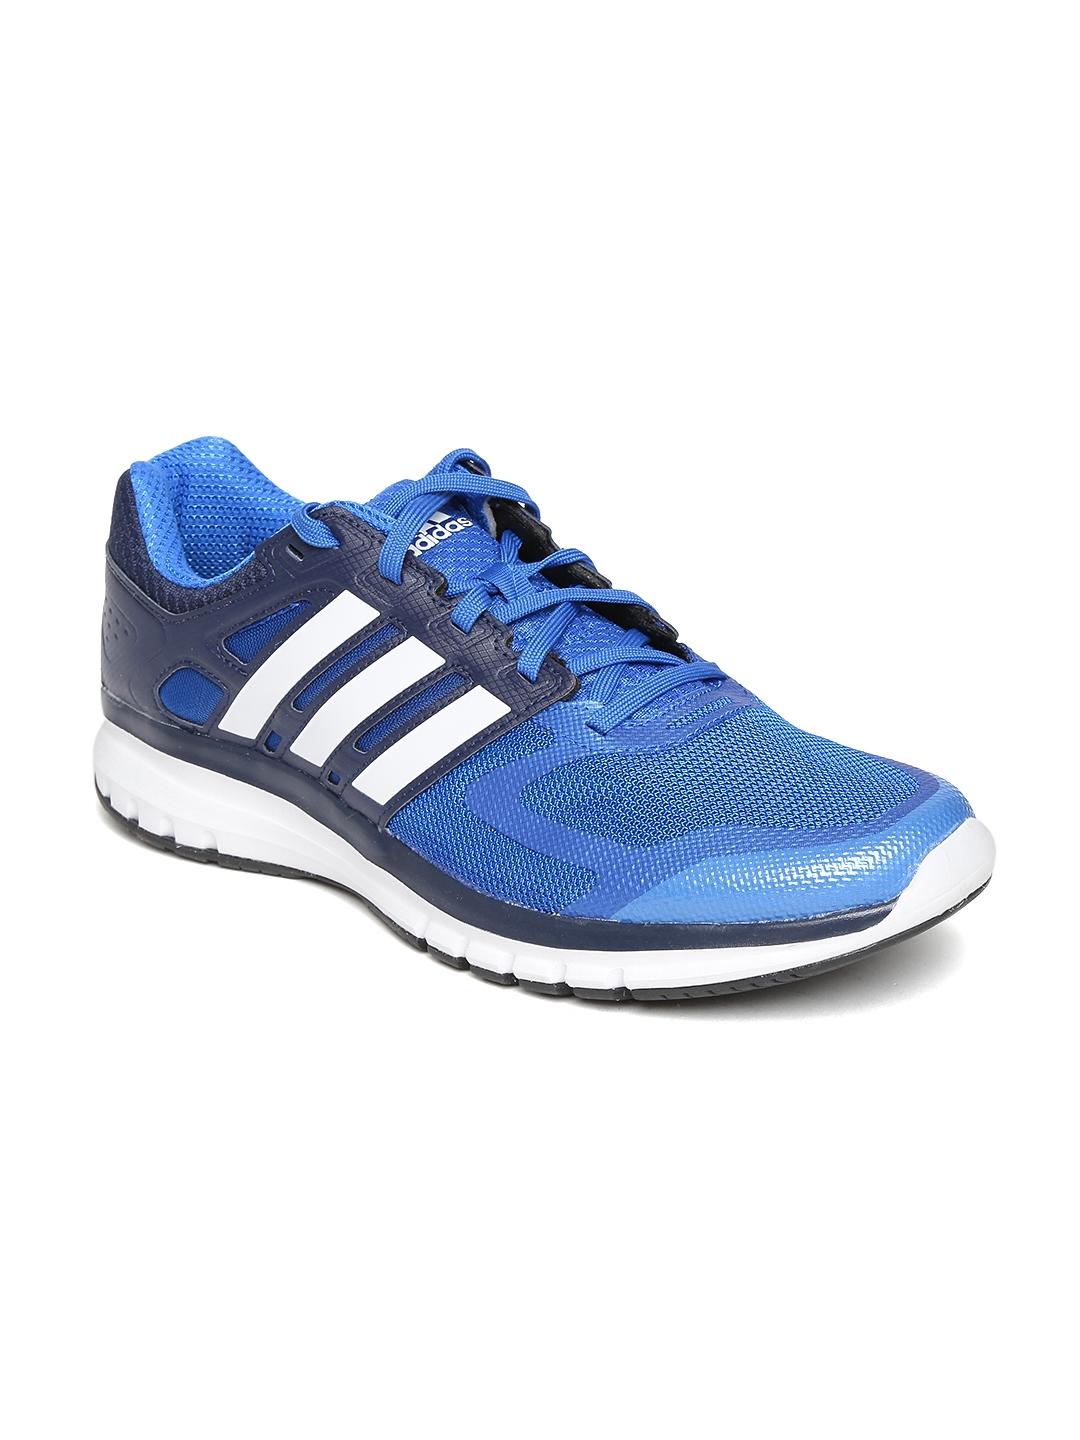 Buy ADIDAS Men Blue Duramo Elite Running Shoes - Sports Shoes for Men ...